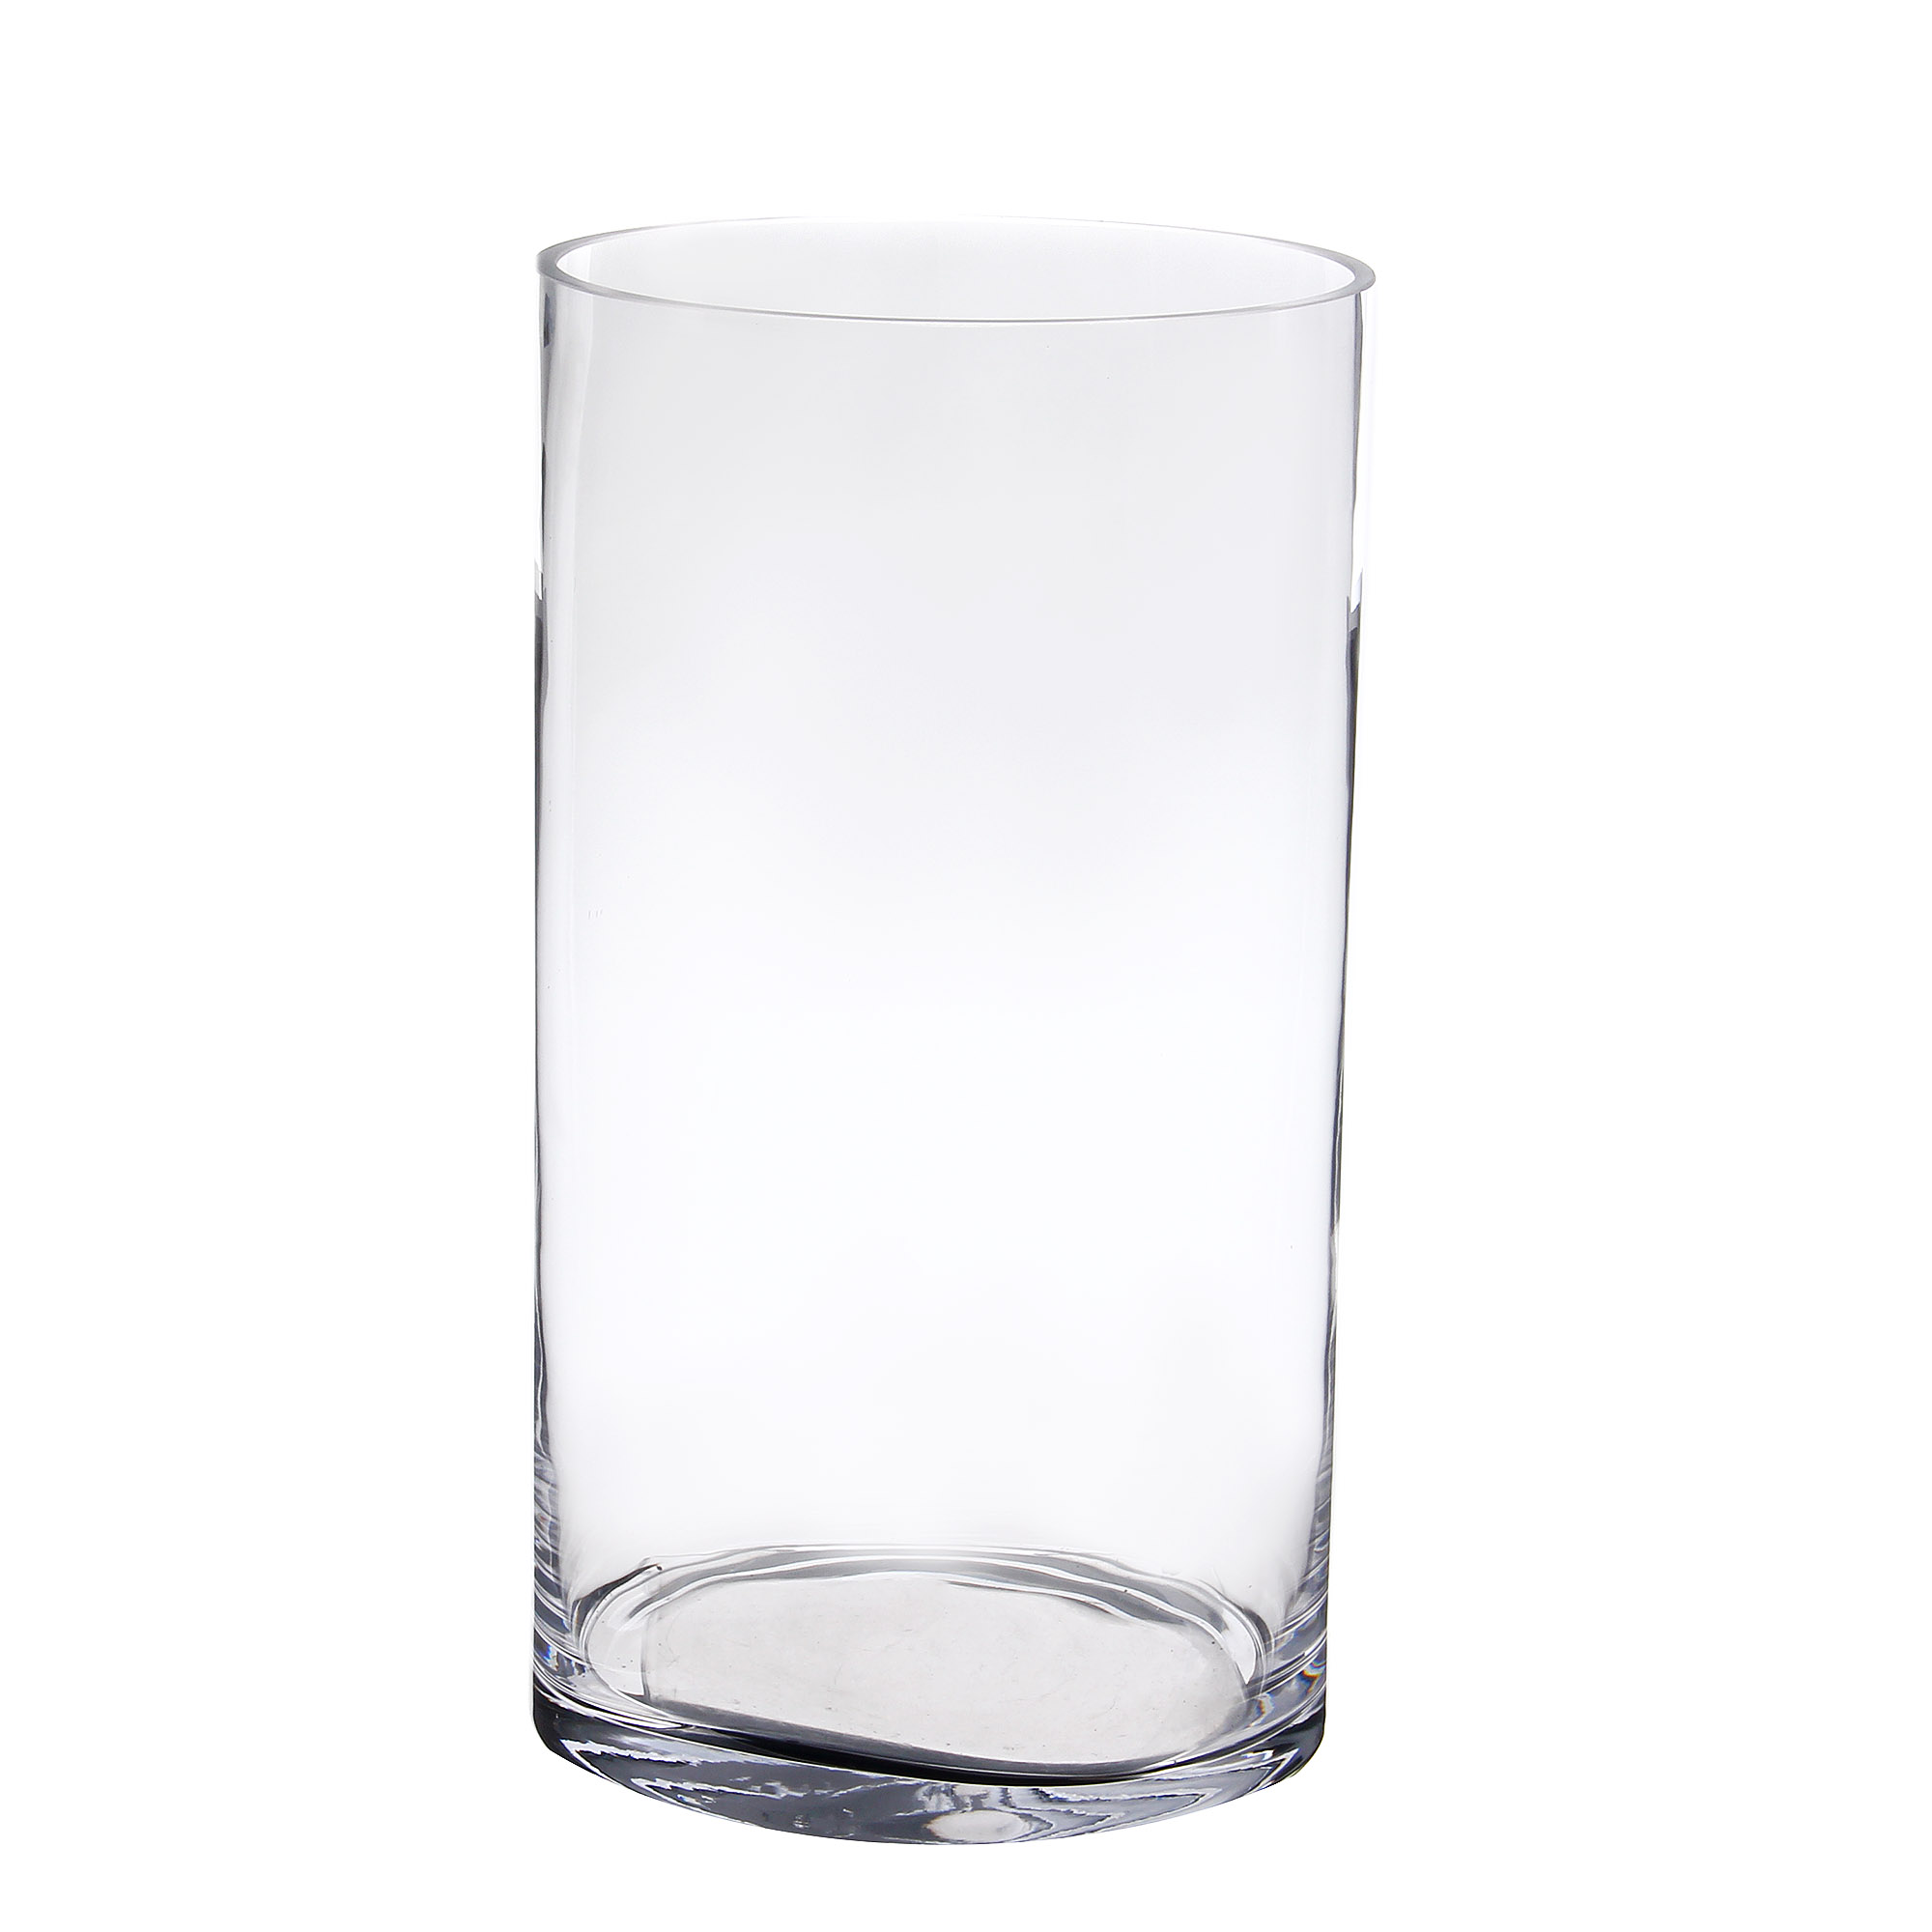 Ваза Hakbijl glass cylinder 45см